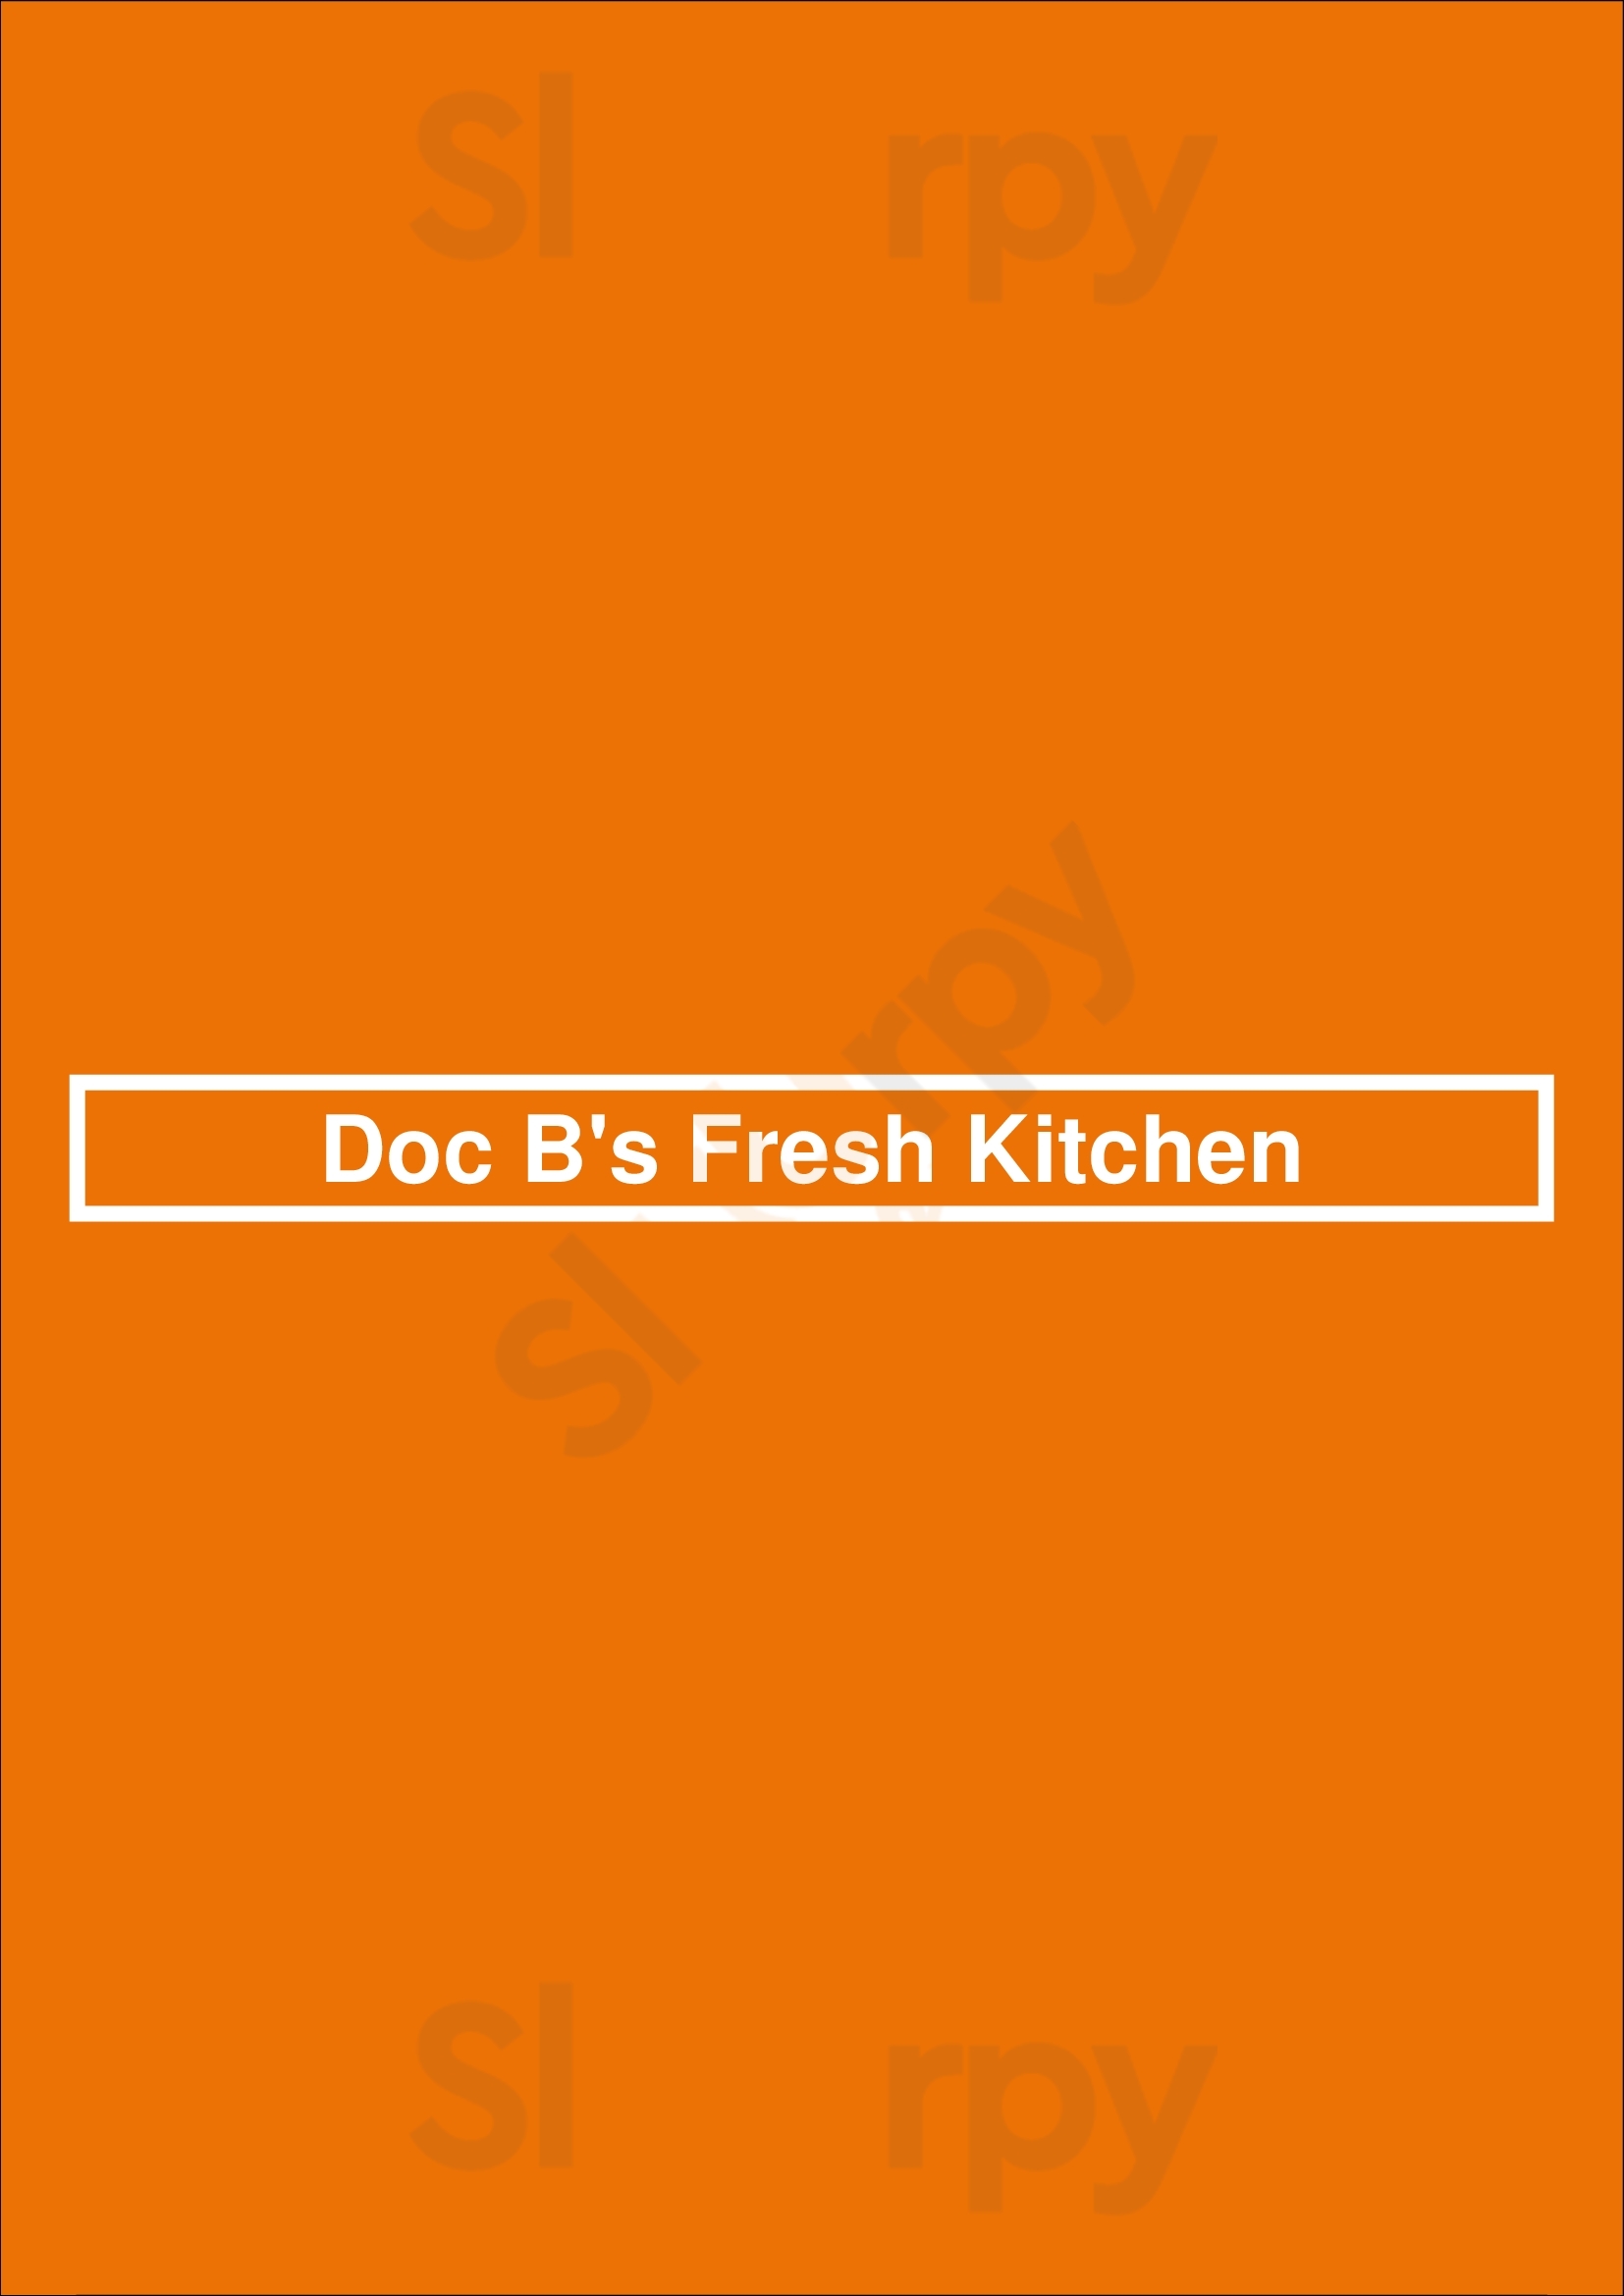 Doc B's Fresh Kitchen Fort Lauderdale Menu - 1